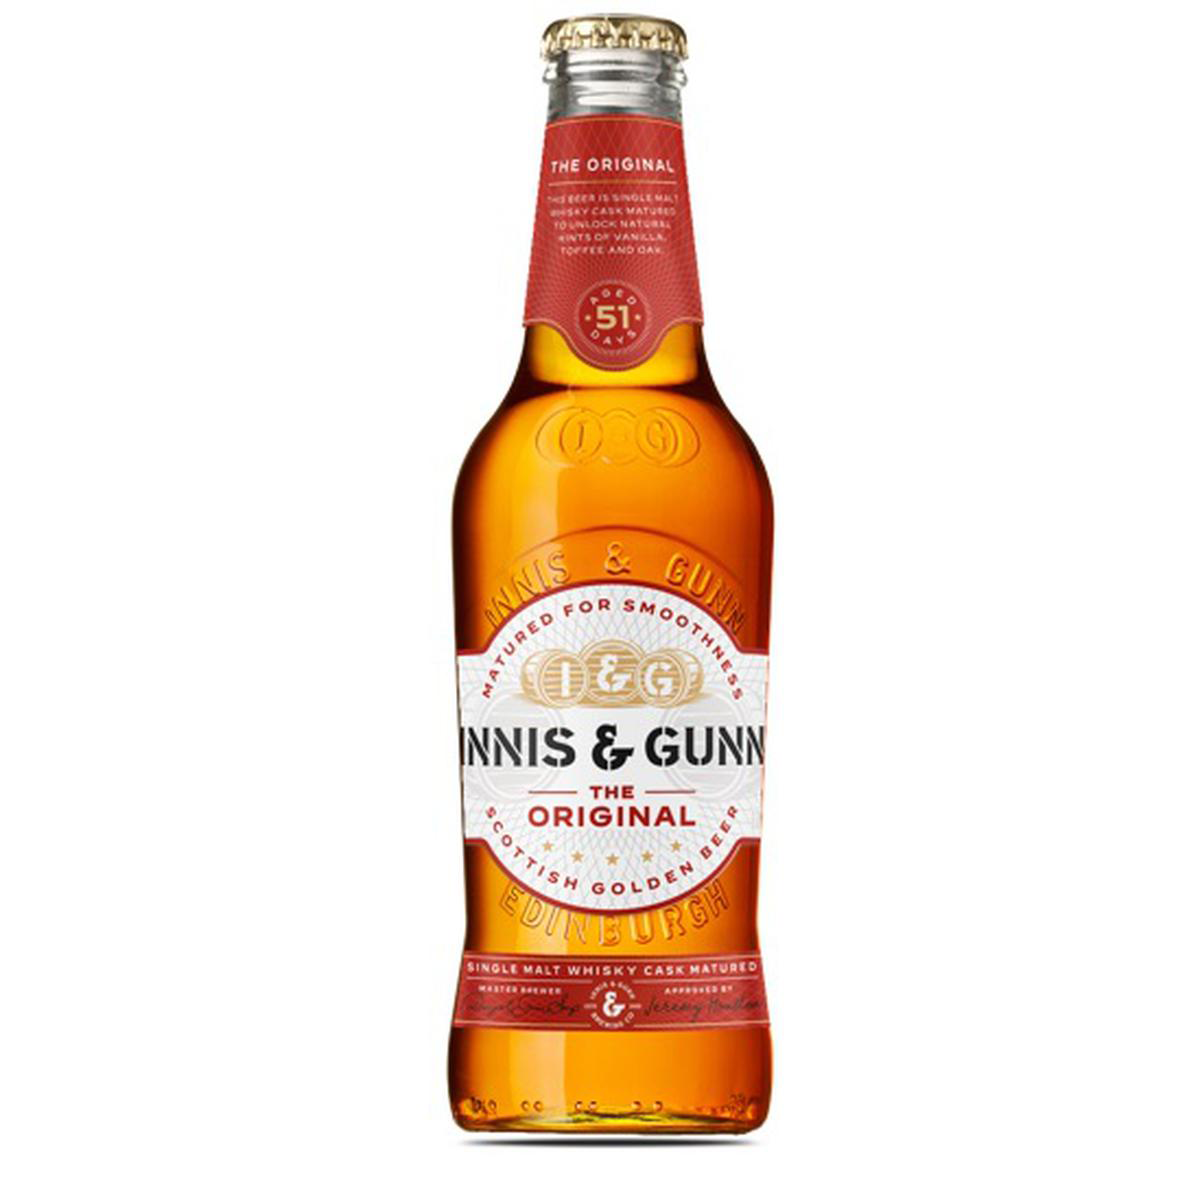 Innis and Gunn The original 330ml